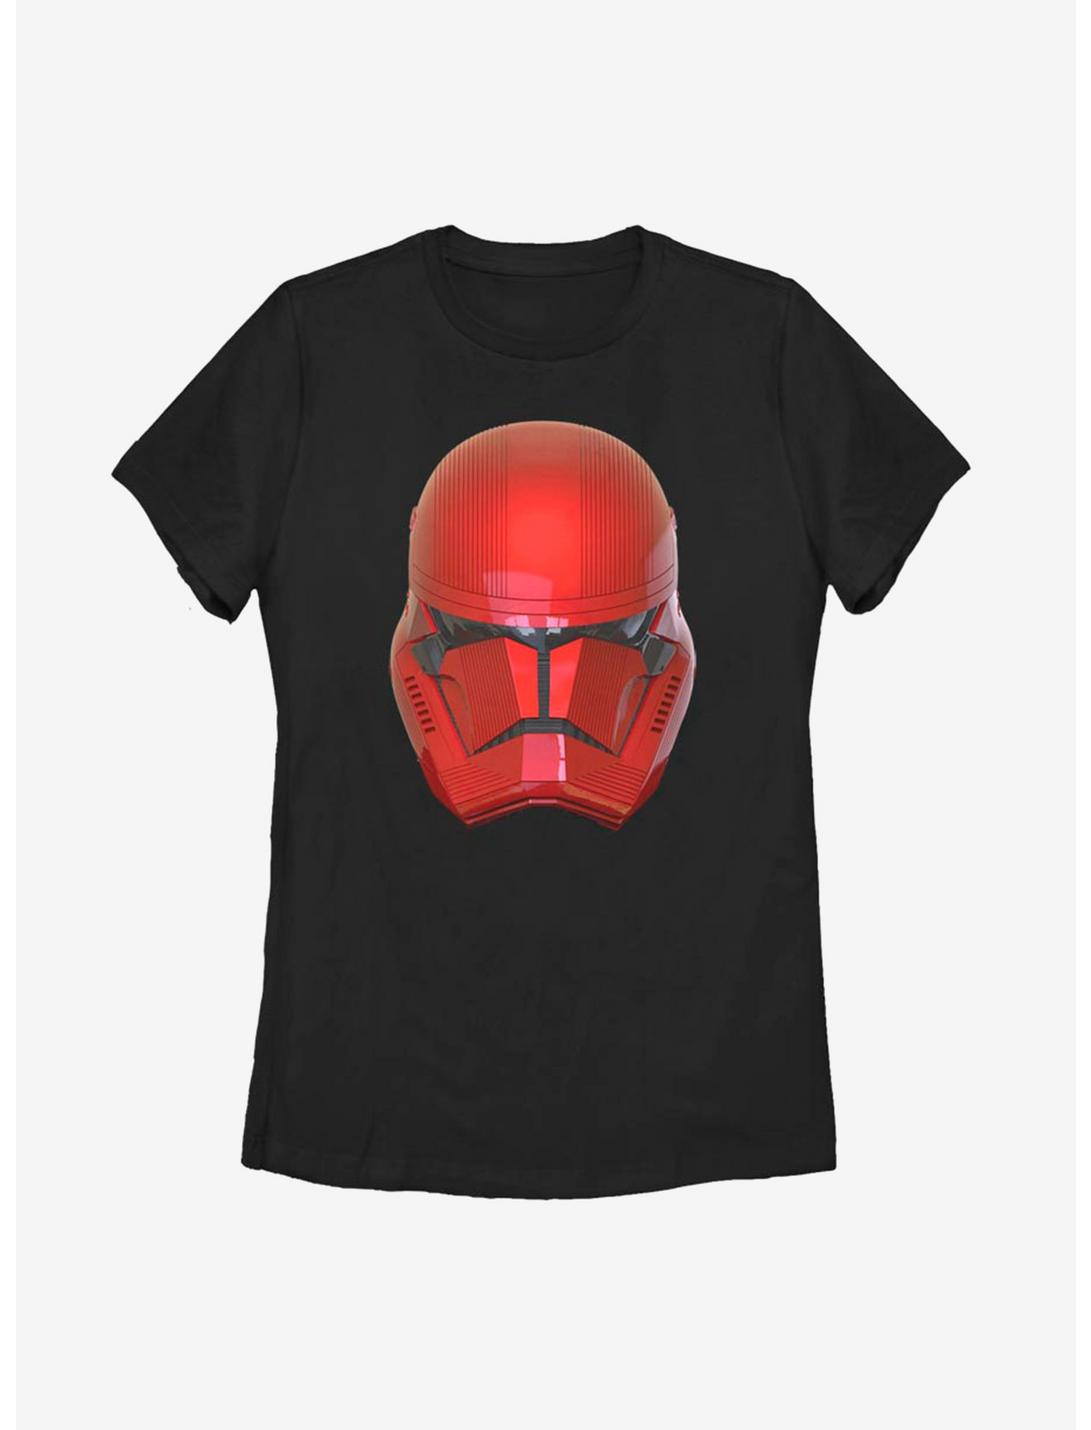 Star Wars Episode IX The Rise Of Skywalker Red Helm Womens T-Shirt, BLACK, hi-res